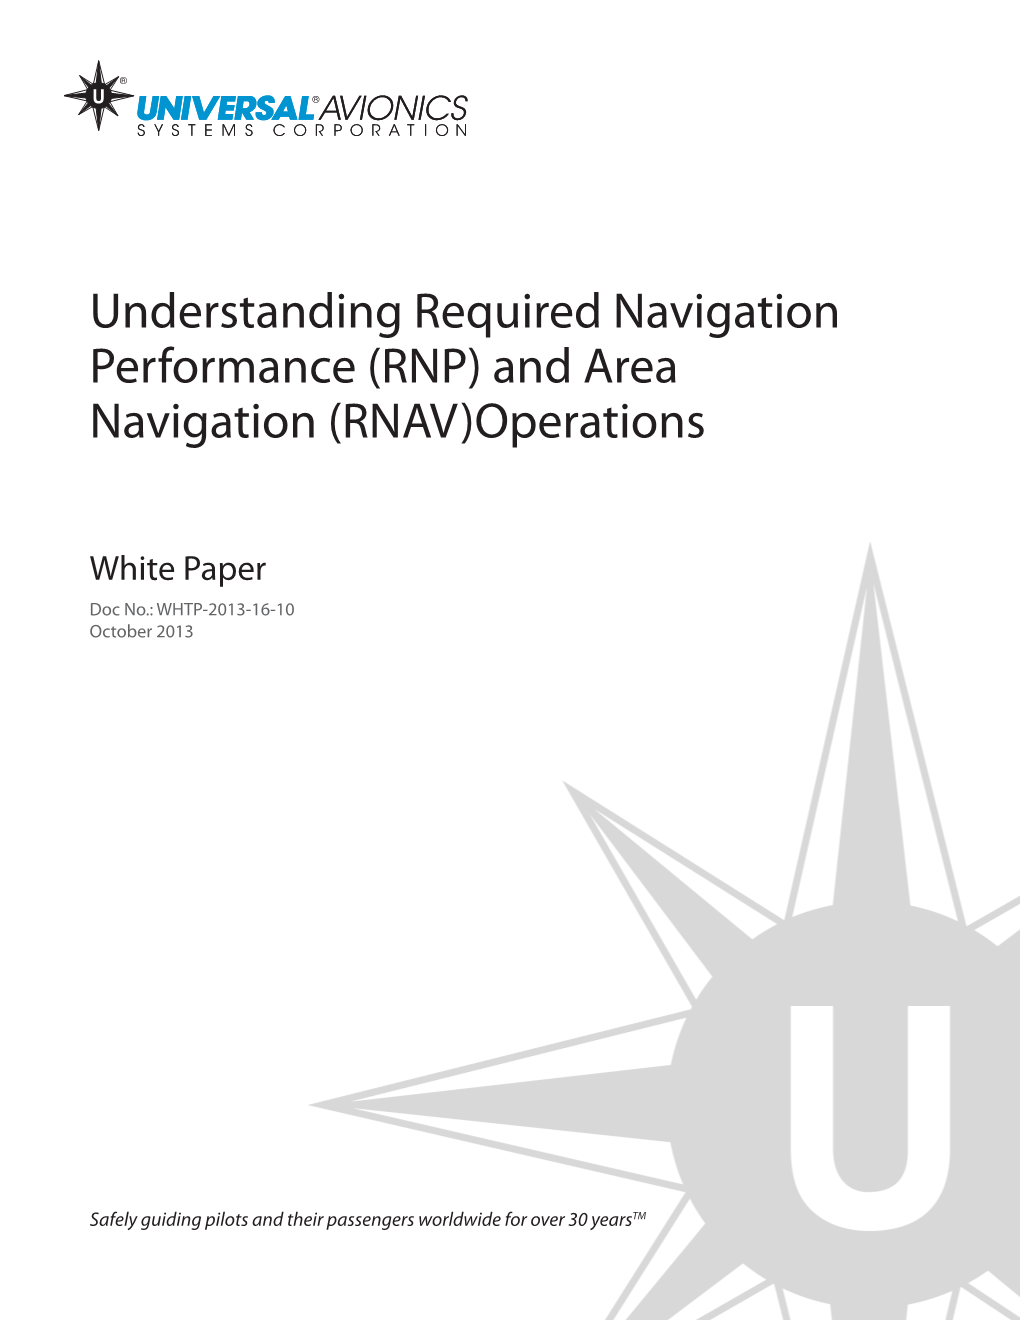 (RNP) and Area Navigation (RNAV)Operations